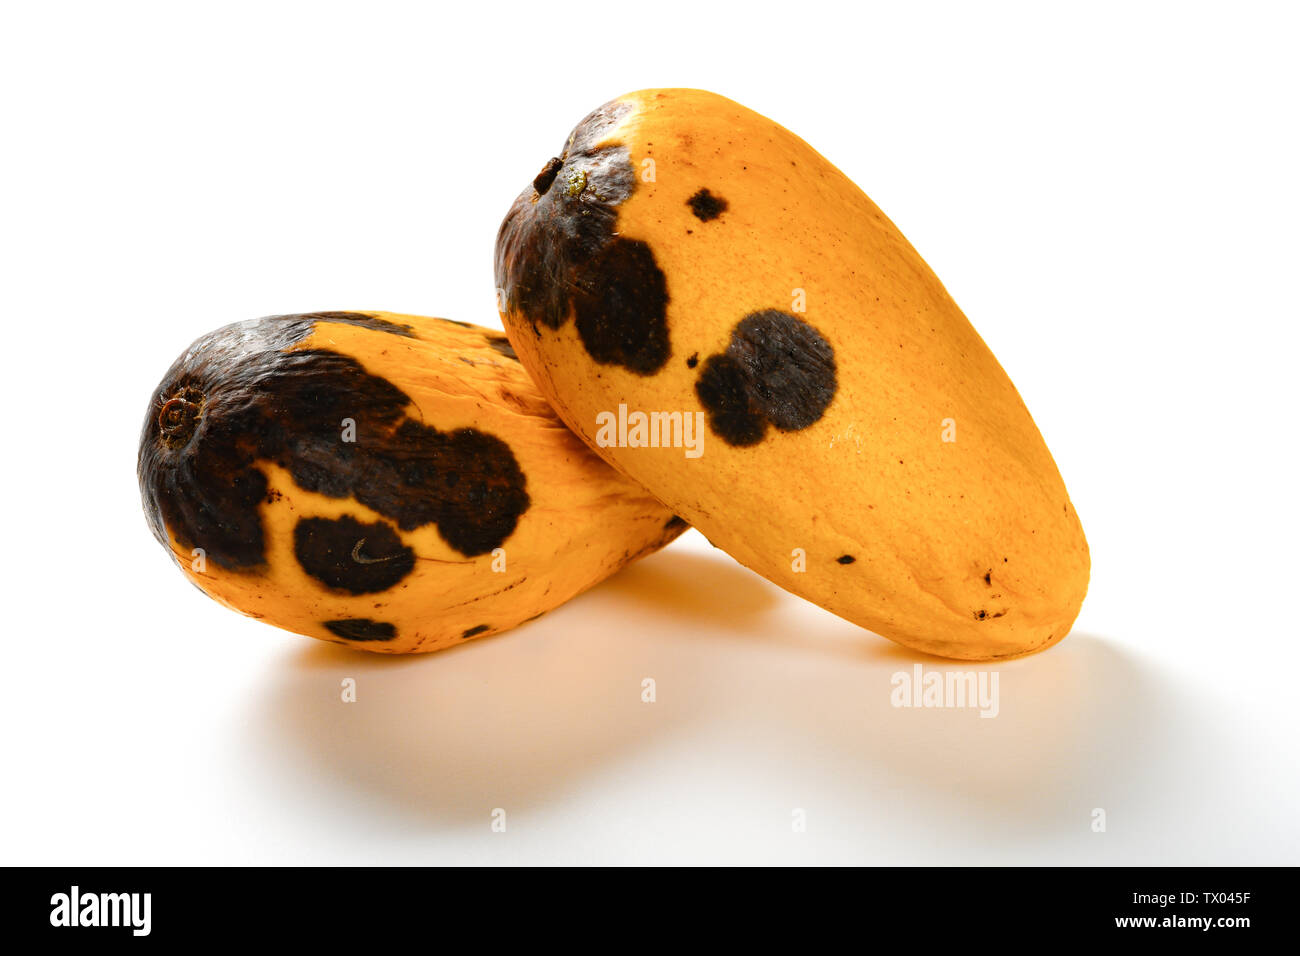 Rotting mango hi-res stock photography and images - Alamy